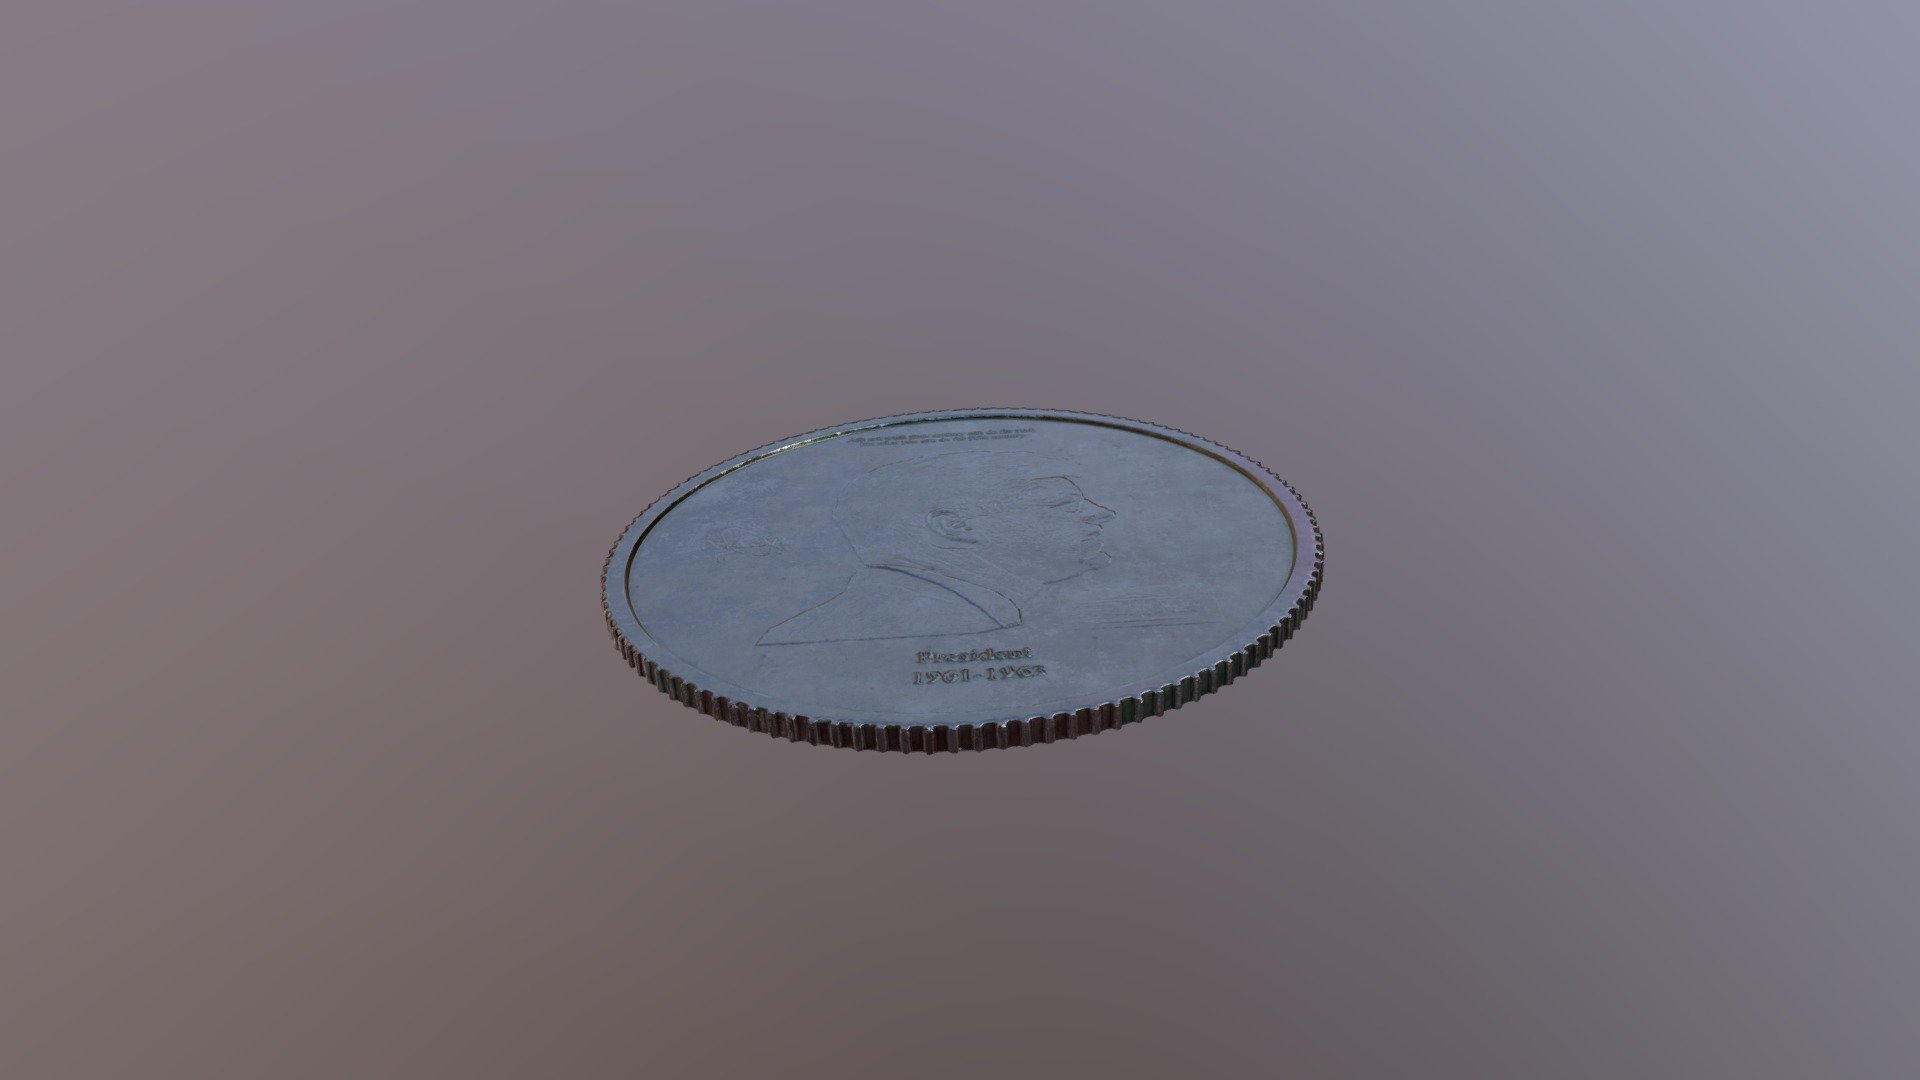 Jfk coin